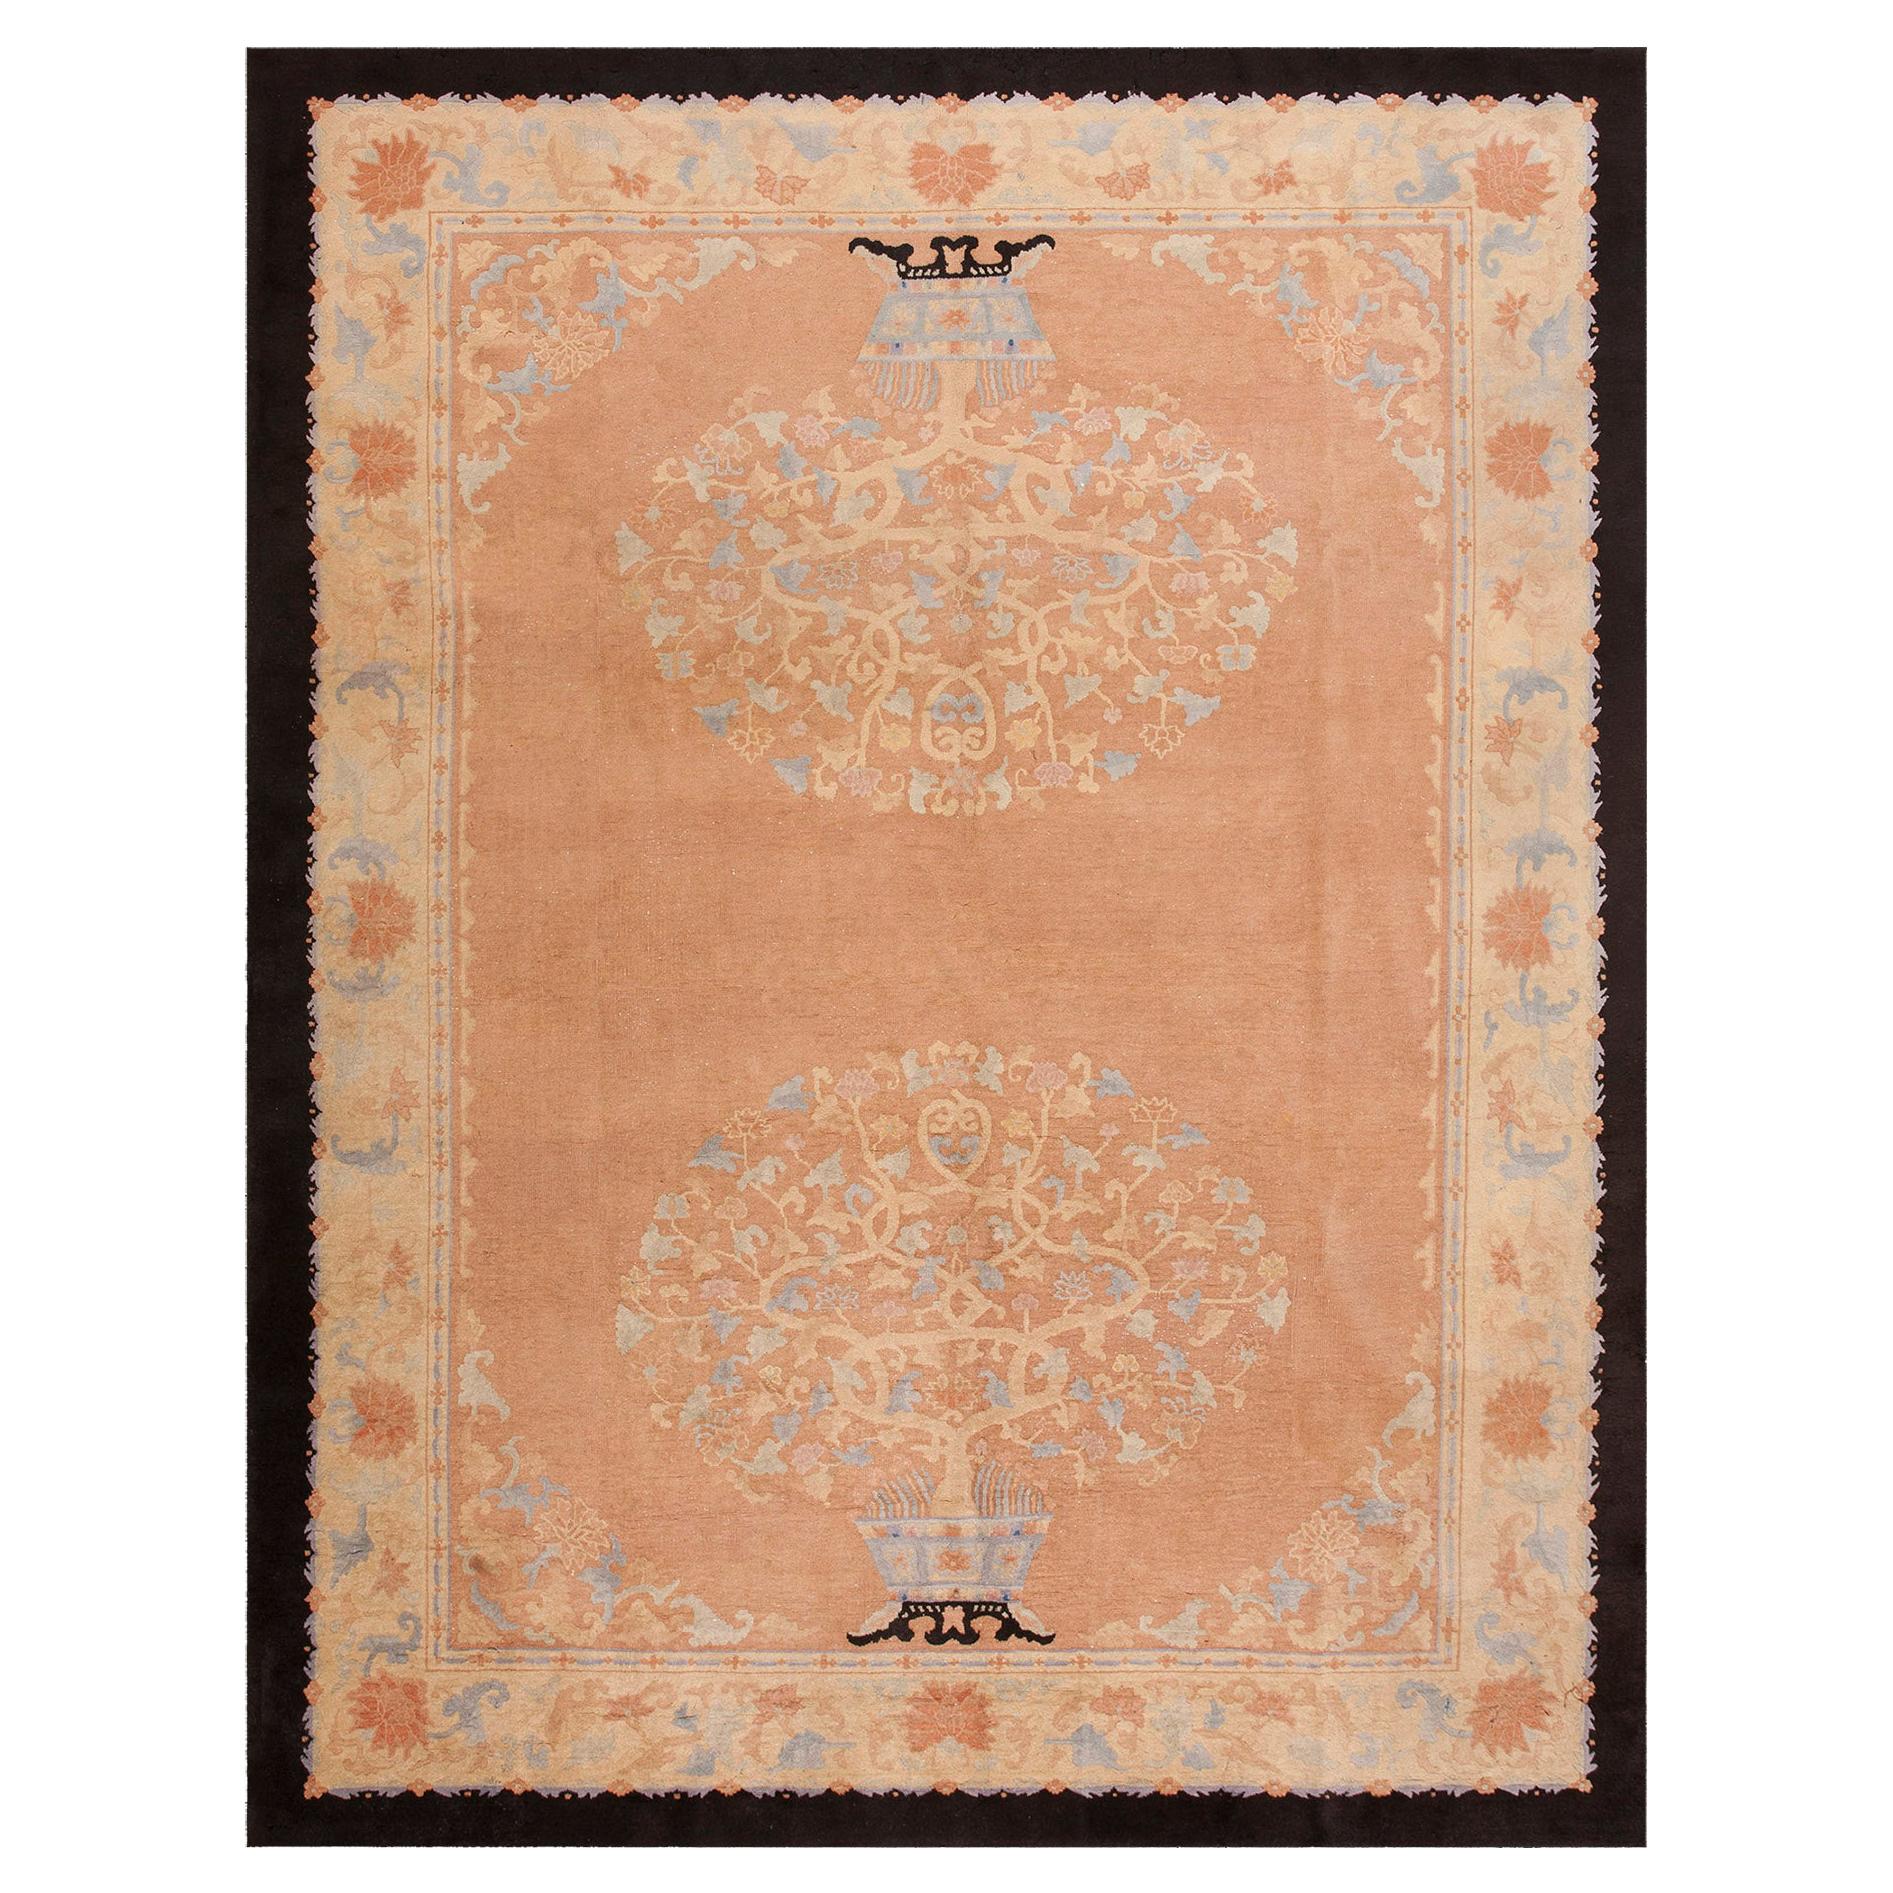 1920s Chinese Art Deco Carpet ( 9' x 11' 6" - 275 x 350 cm )